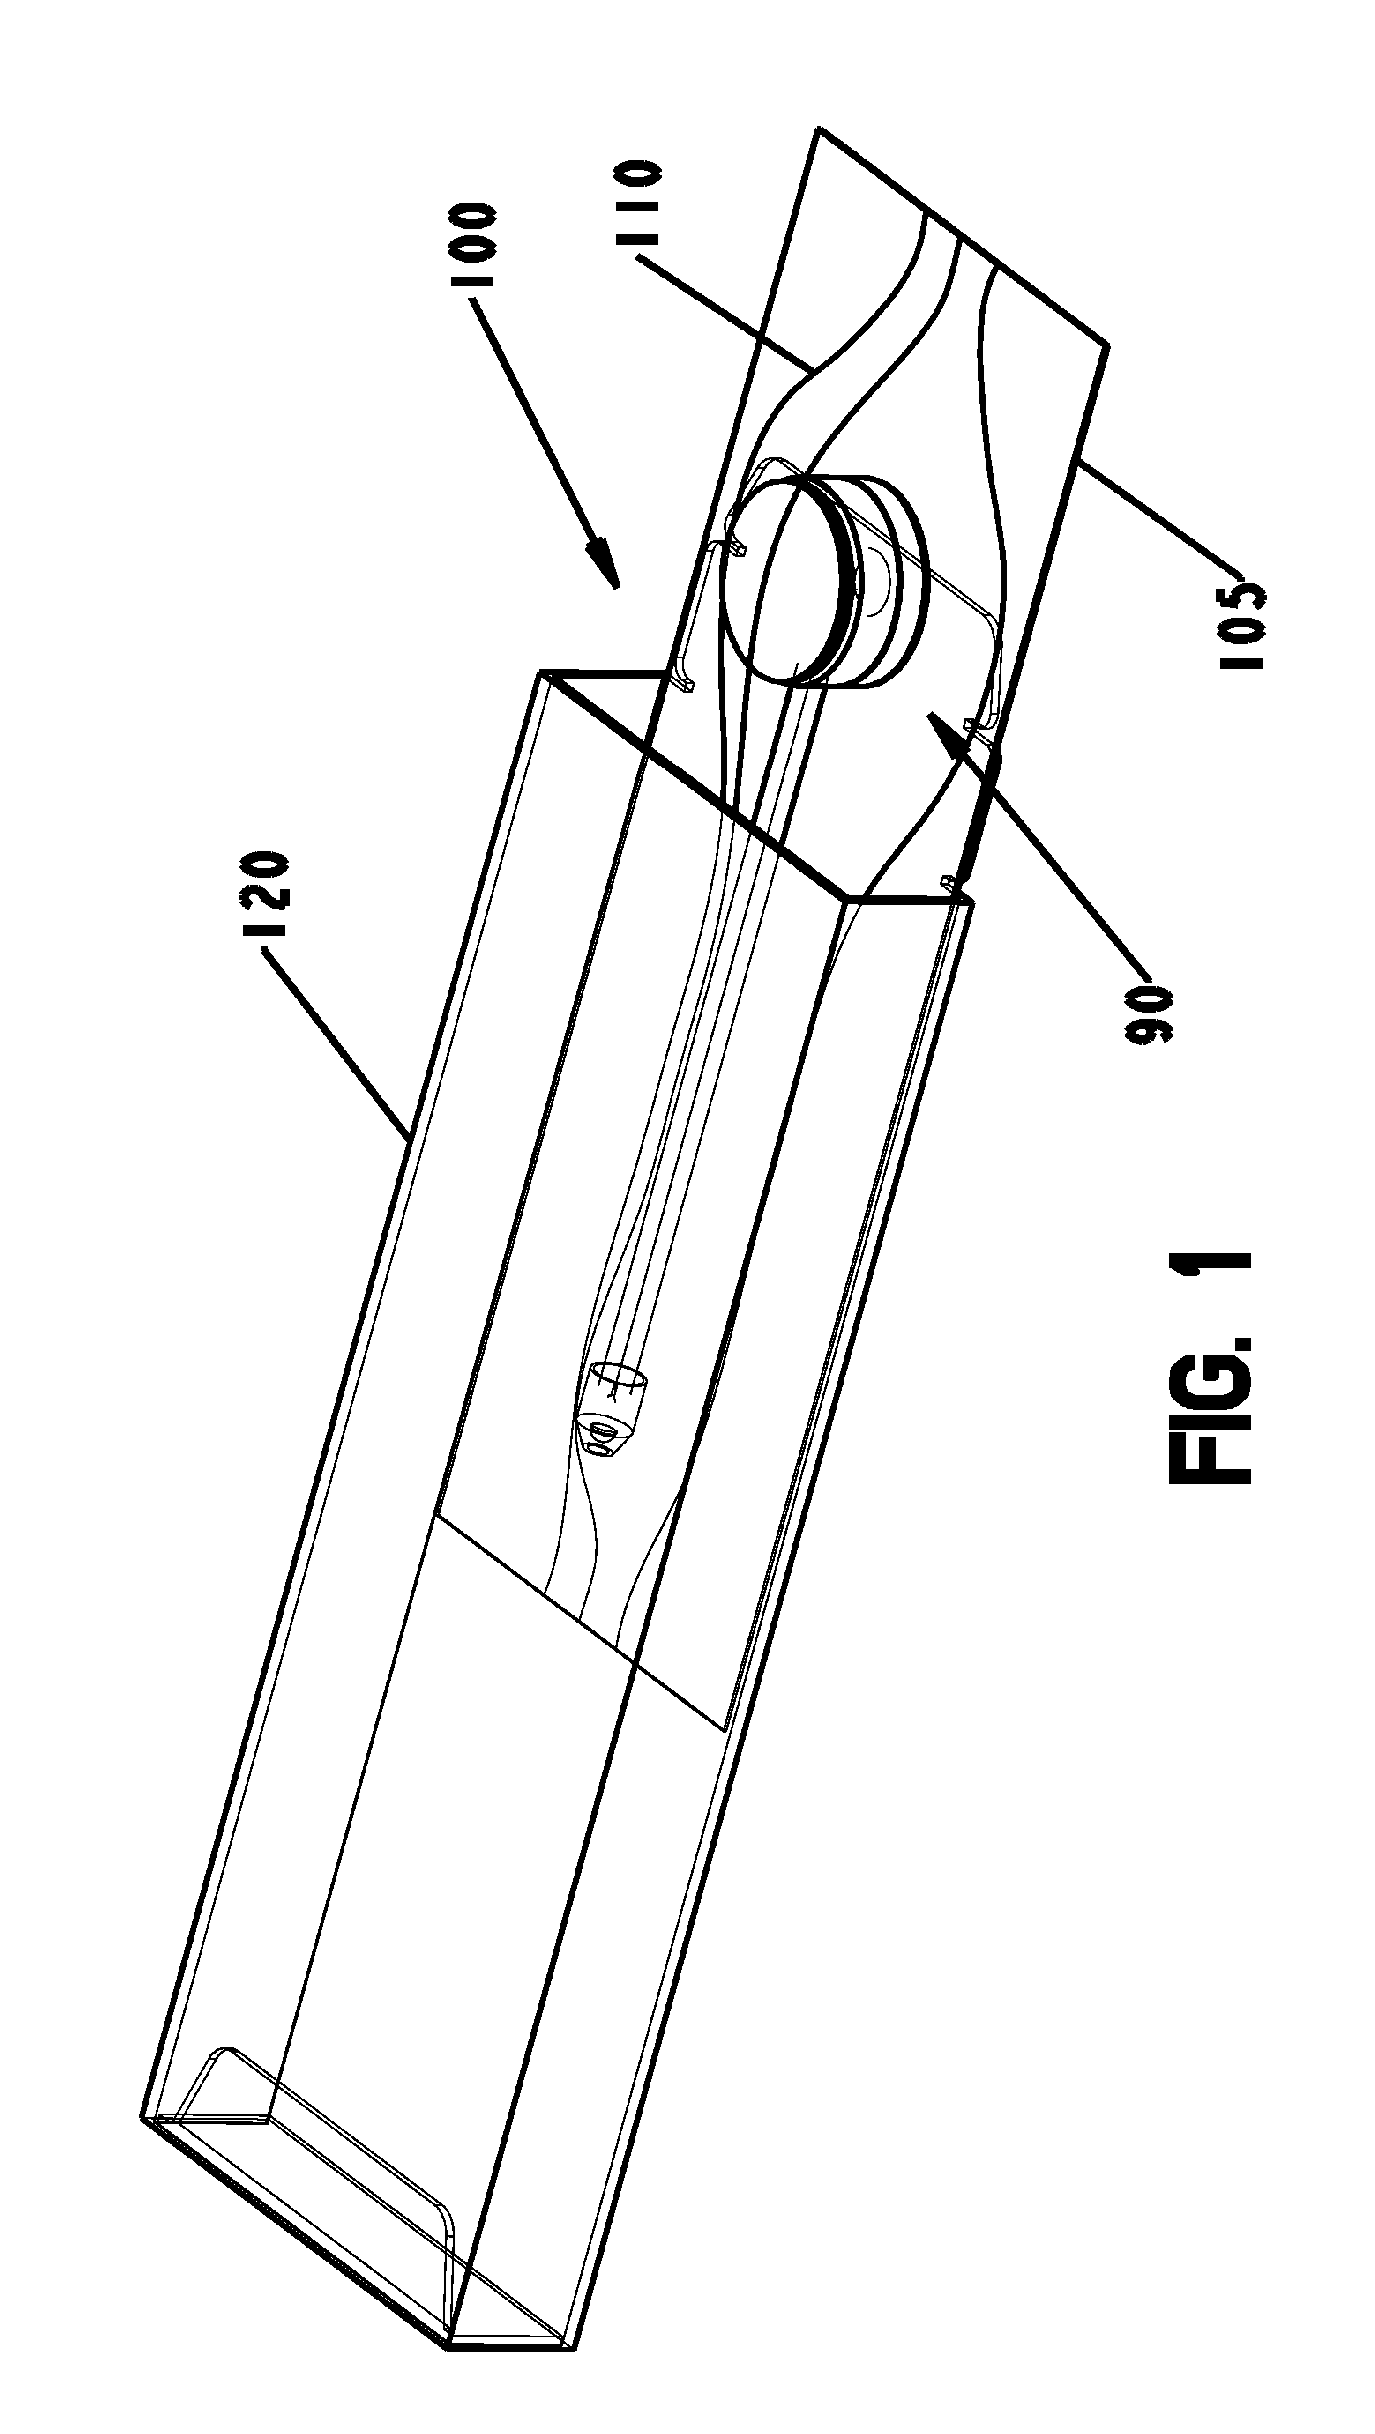 Medical Illumination Device with a Base